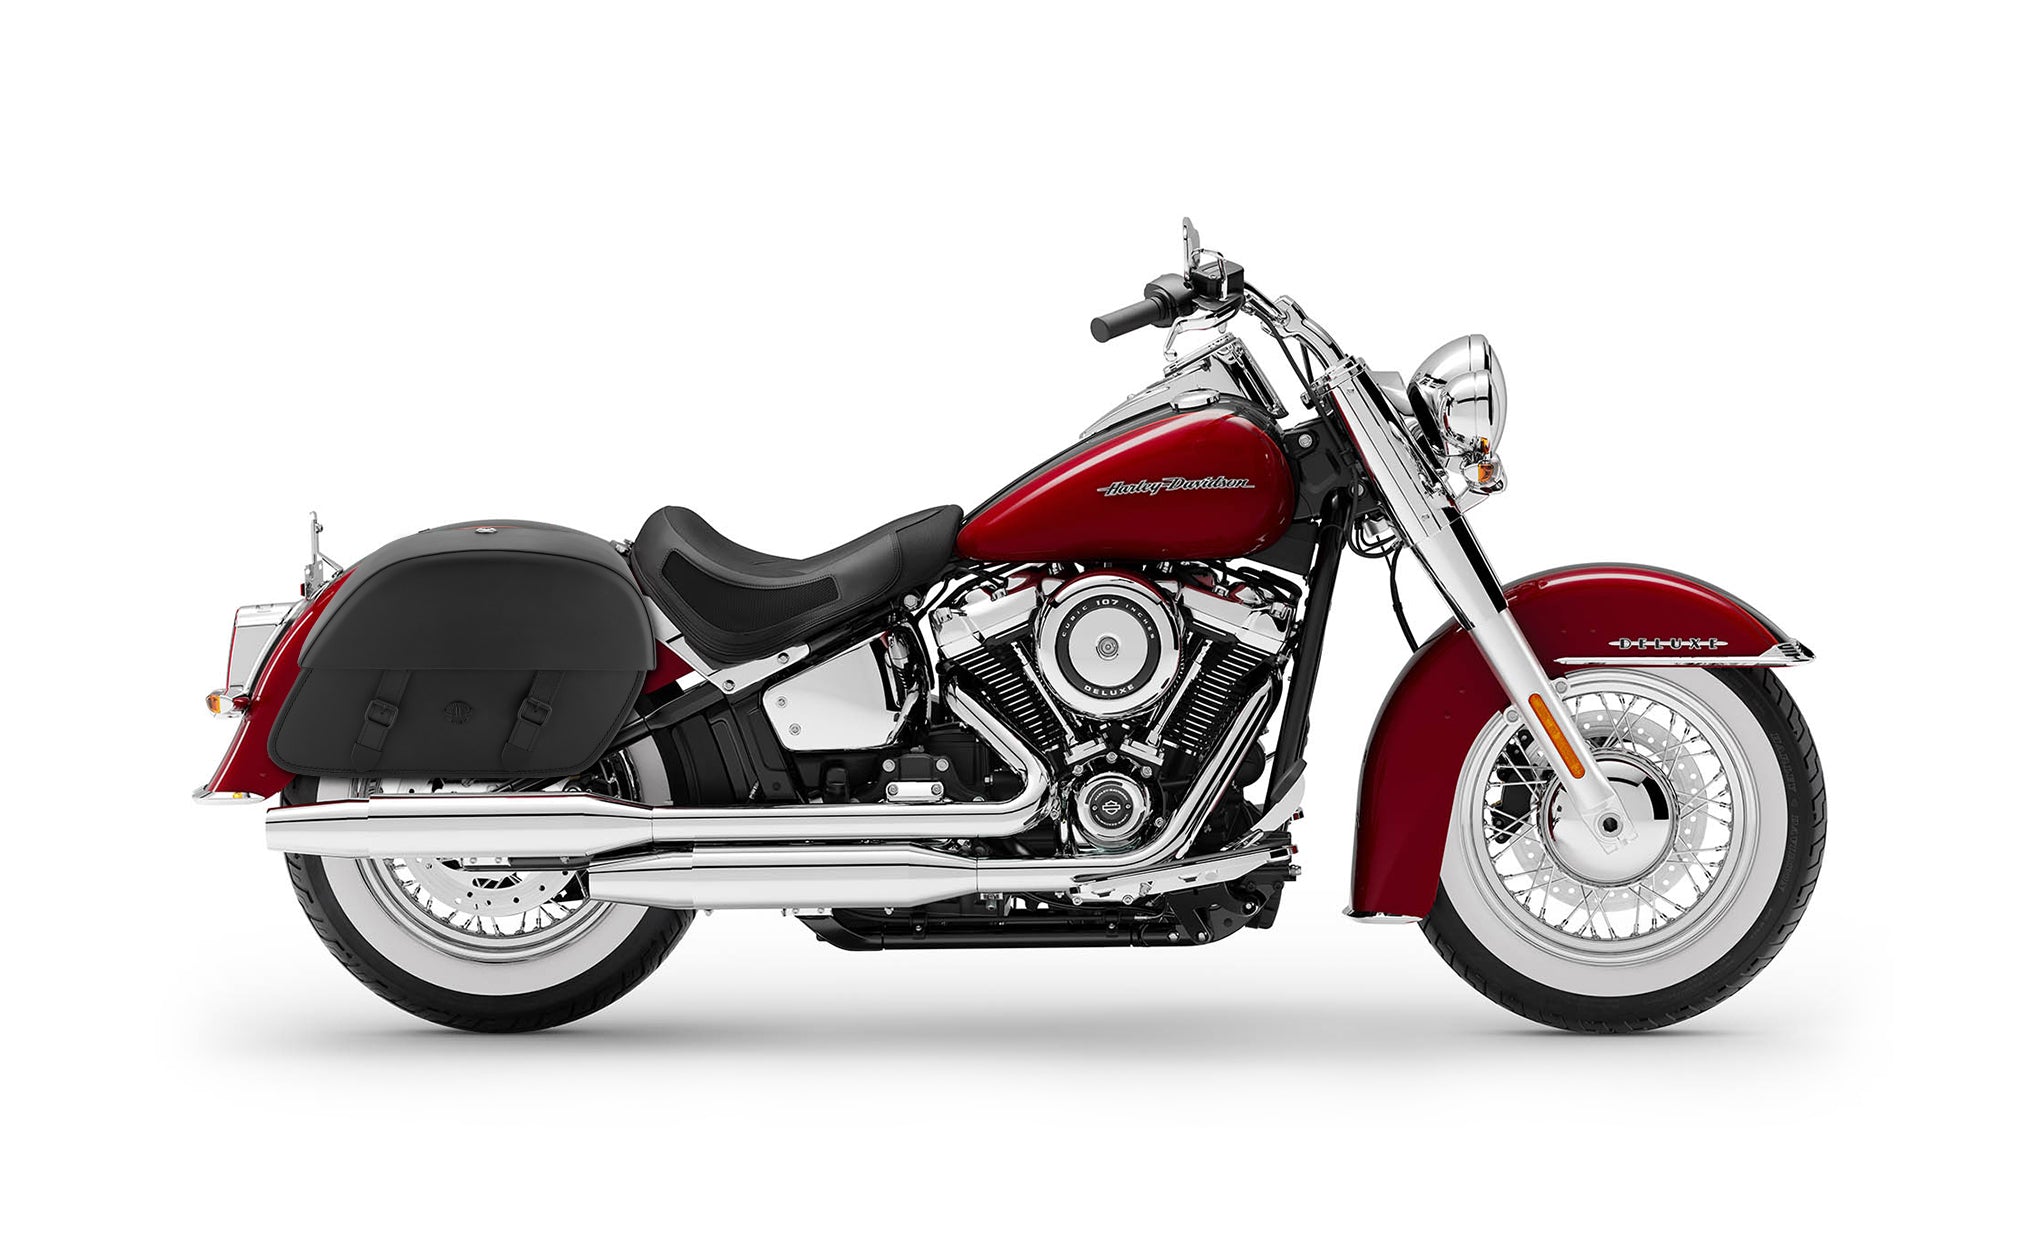 28L - Baelor Medium Saddlebags for Harley Softail Deluxe FLDE @expand